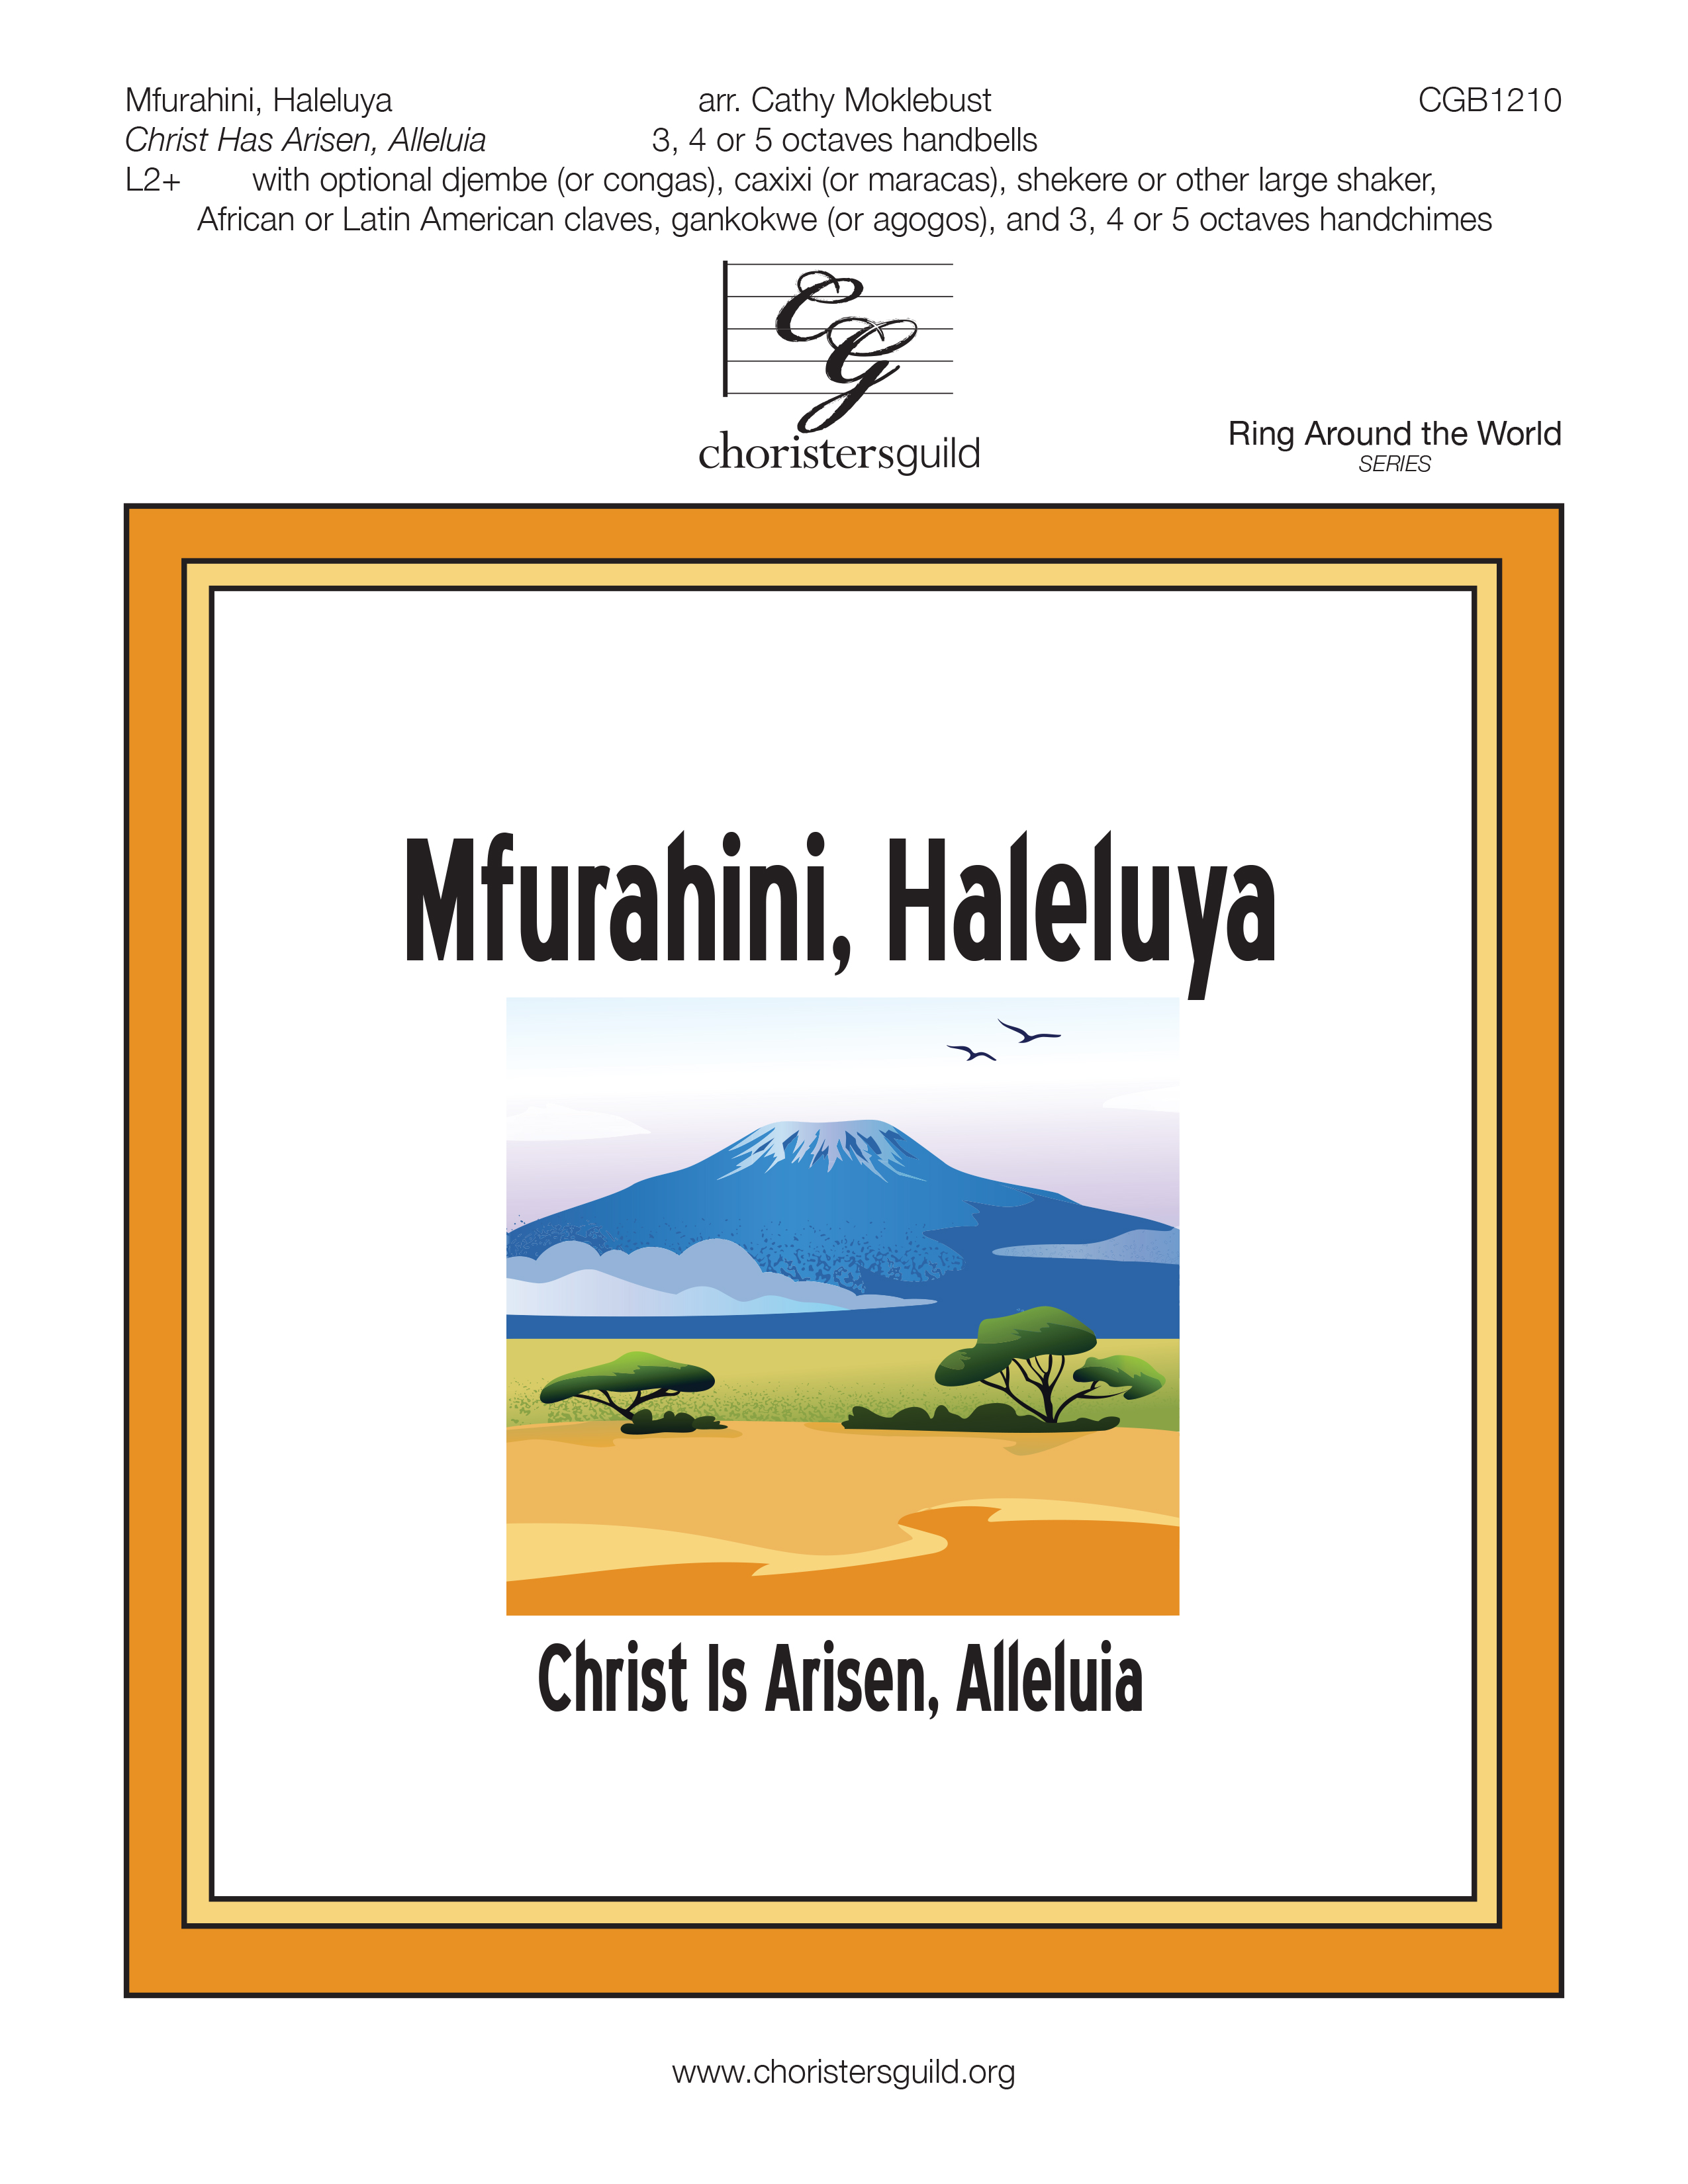 Mfurahini Haleluya (Christ is Risen, Alleluia) - 3-5 octaves